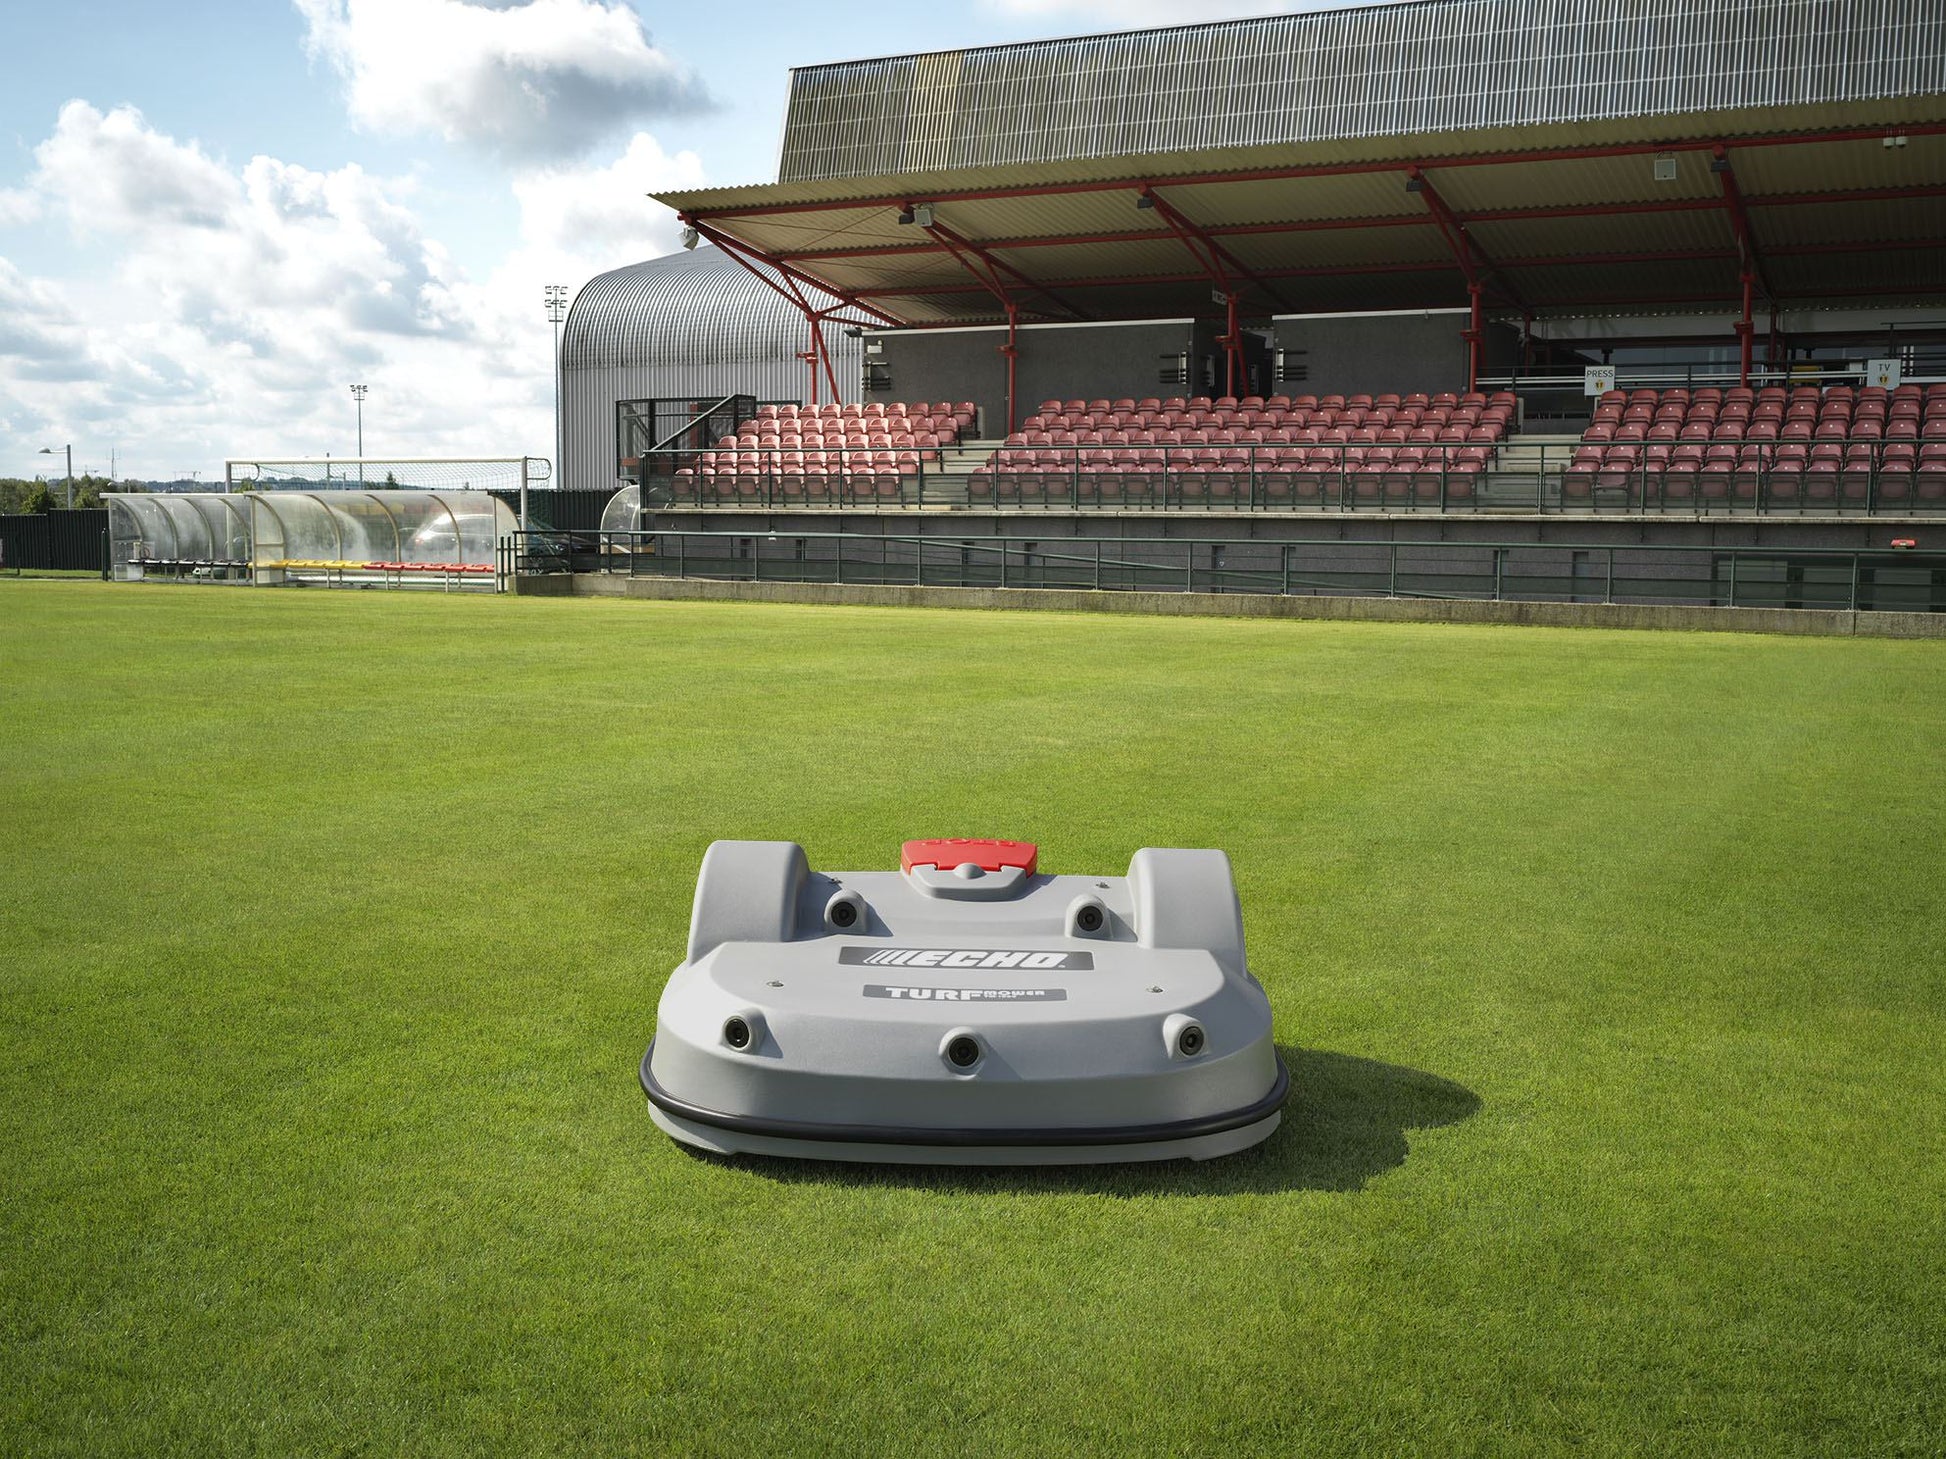 Stadium mowing robot 